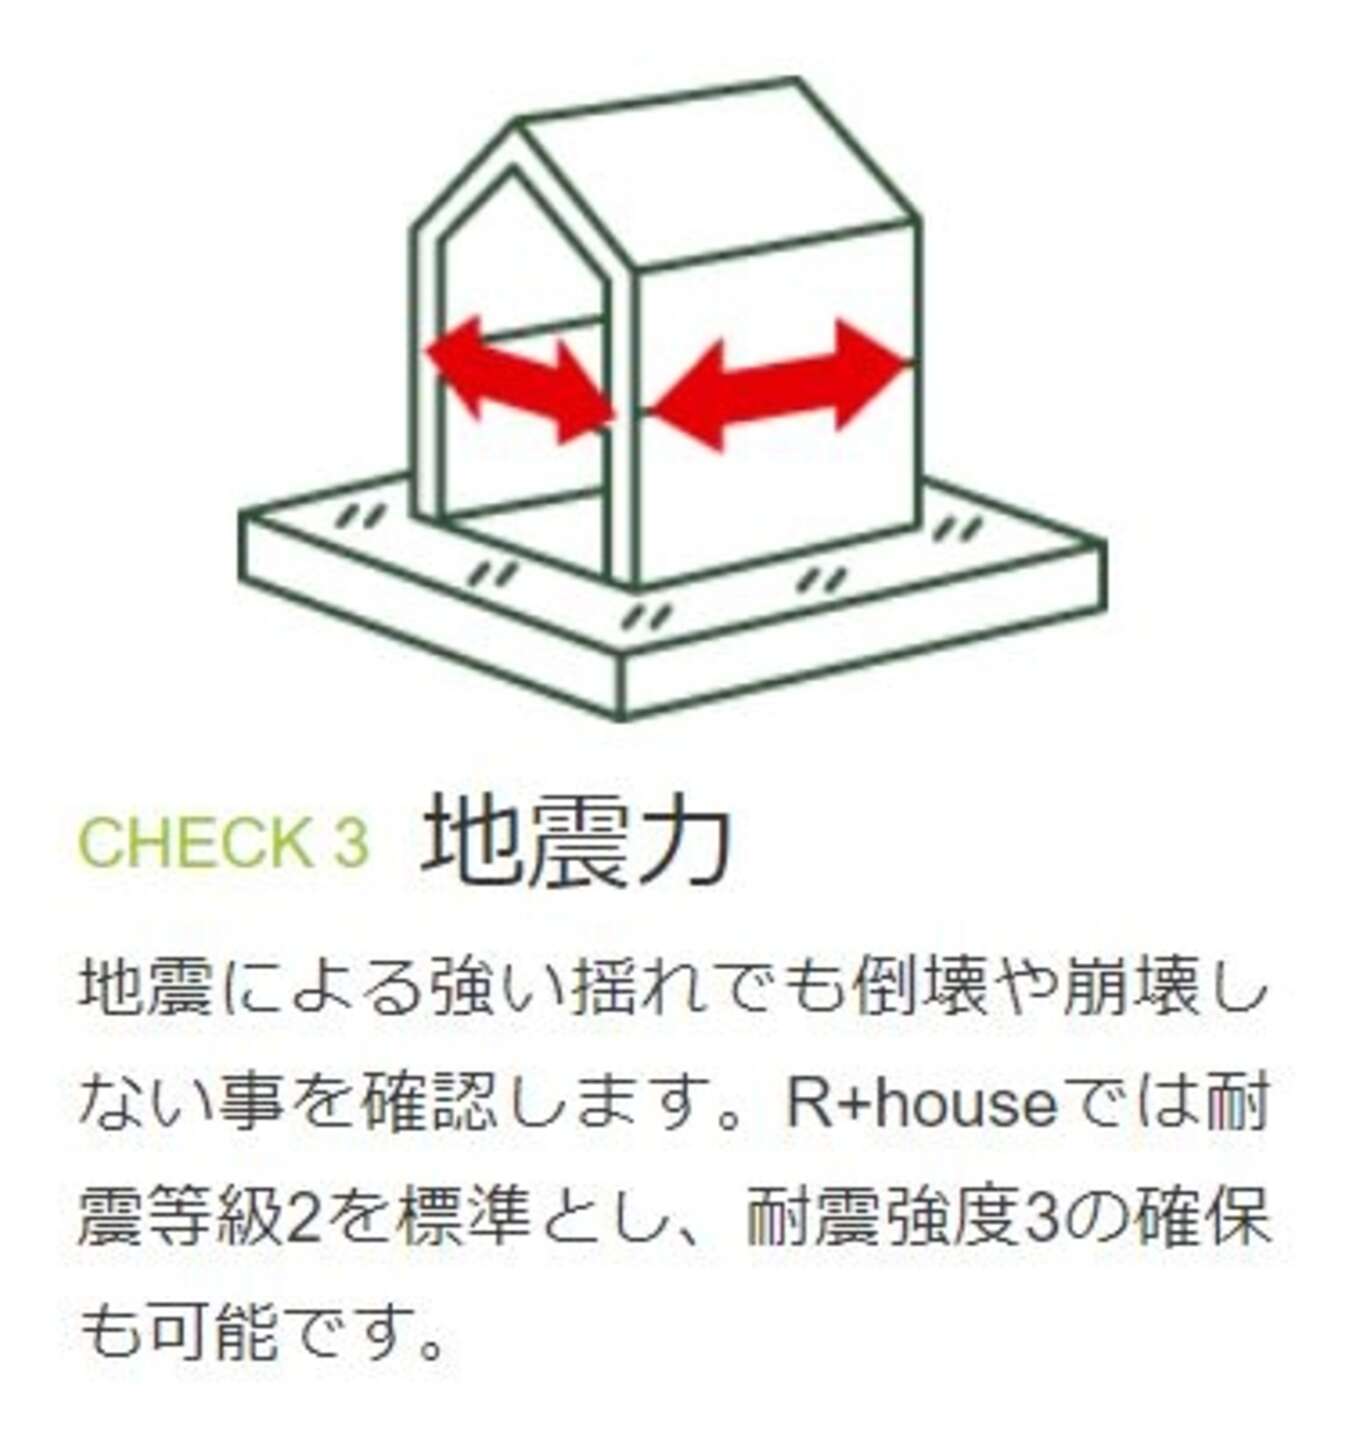 R+houseの耐震強度